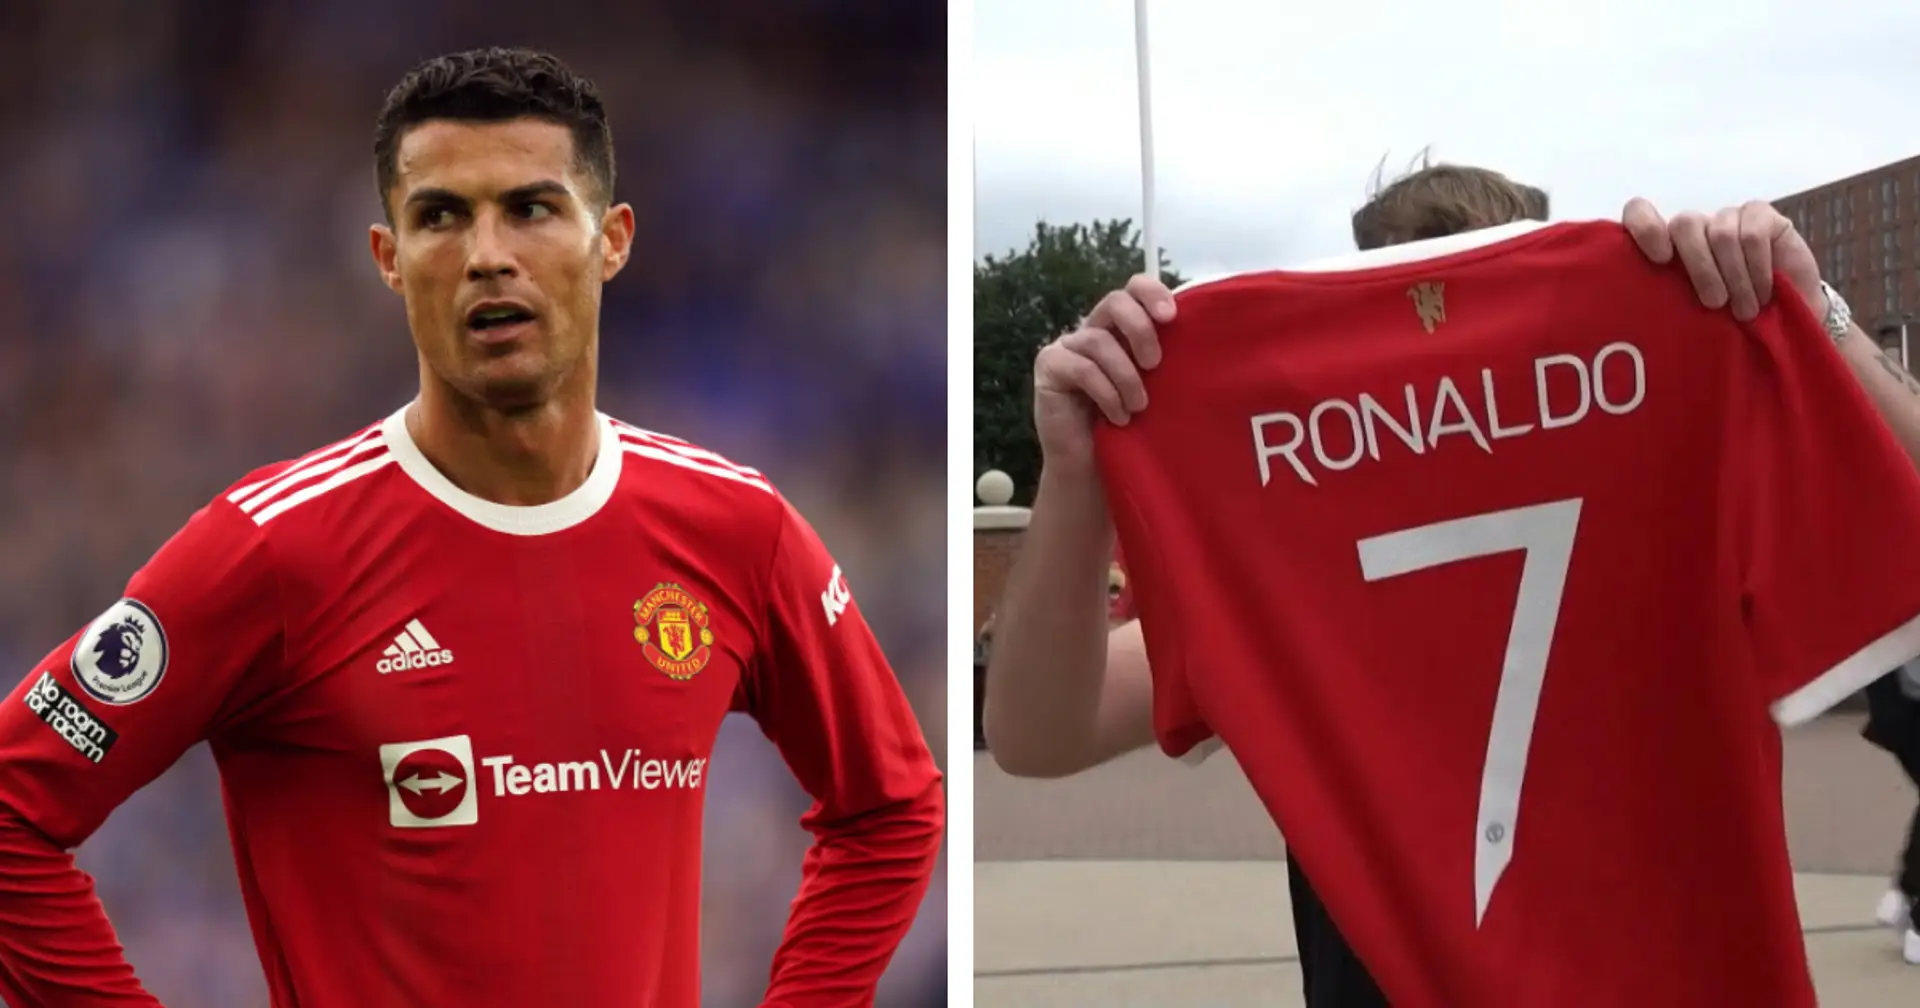 United refuse to refund Ronaldo shirts & 3 more latest under-radar stories